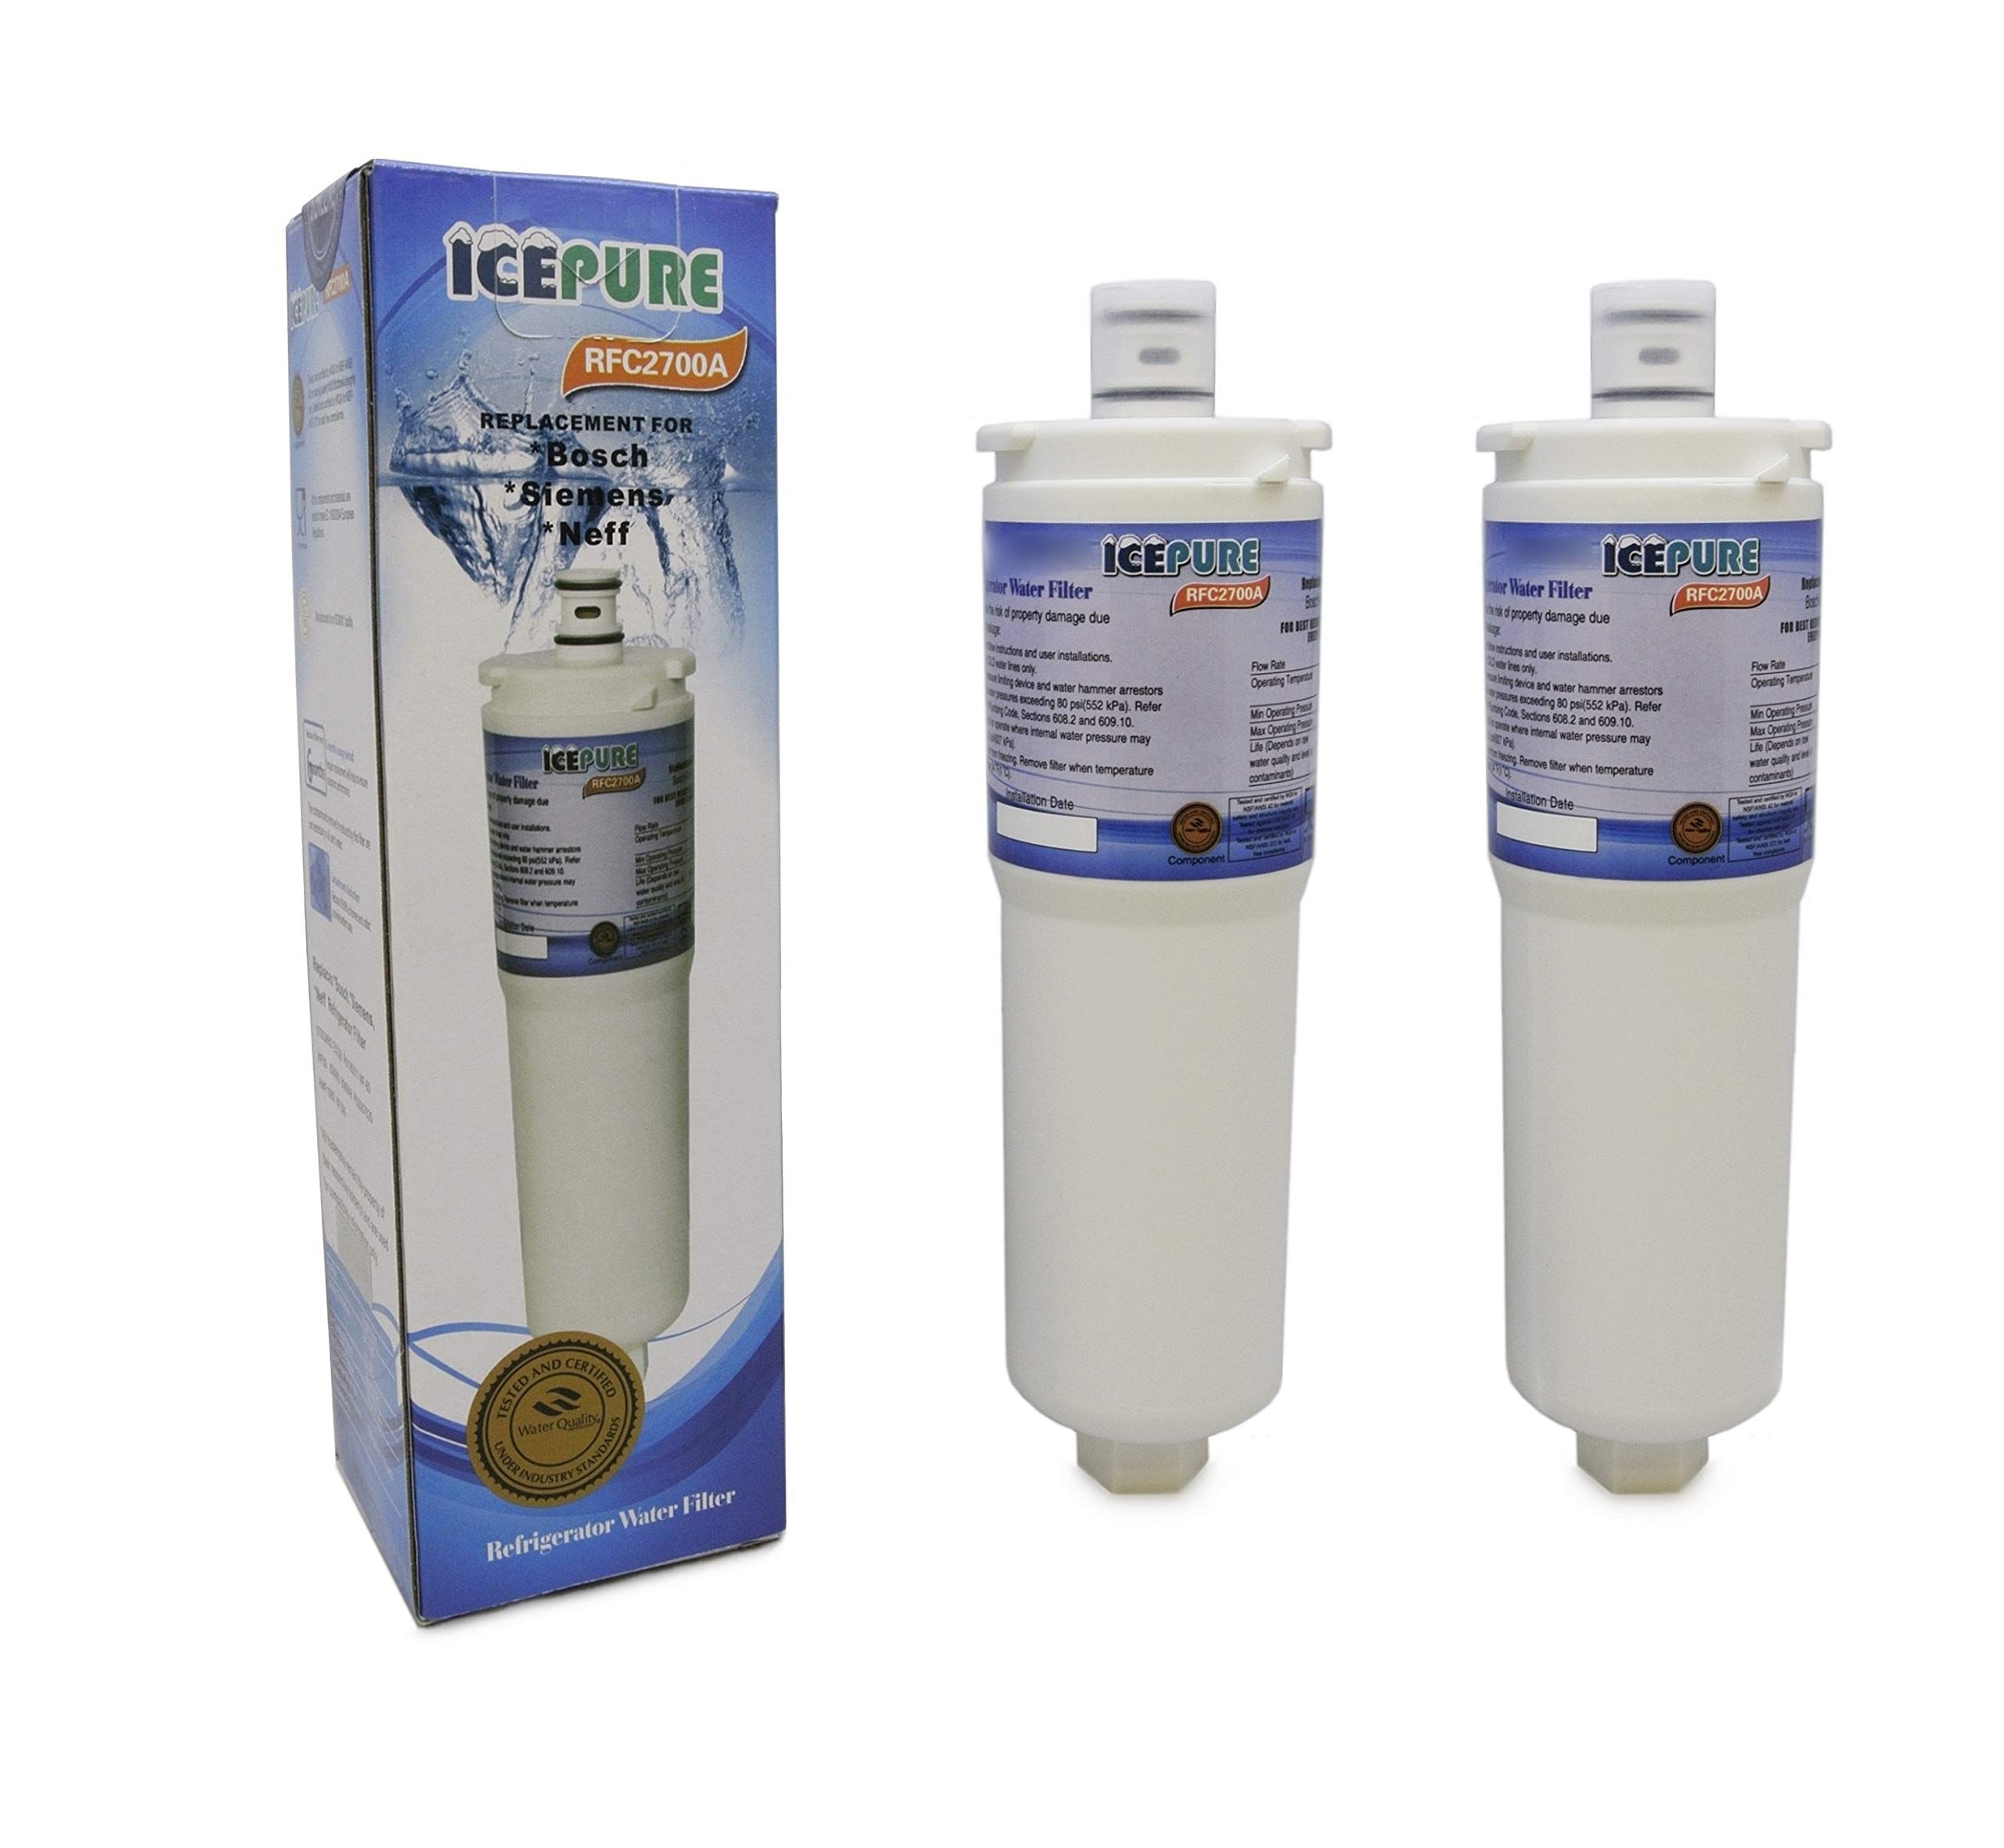 IcePure RFC2700A Kühlschrank Wasser Filter kompatibel mit CS-52 fur Siemens, Bosch, Neff CS52 2 Stuck